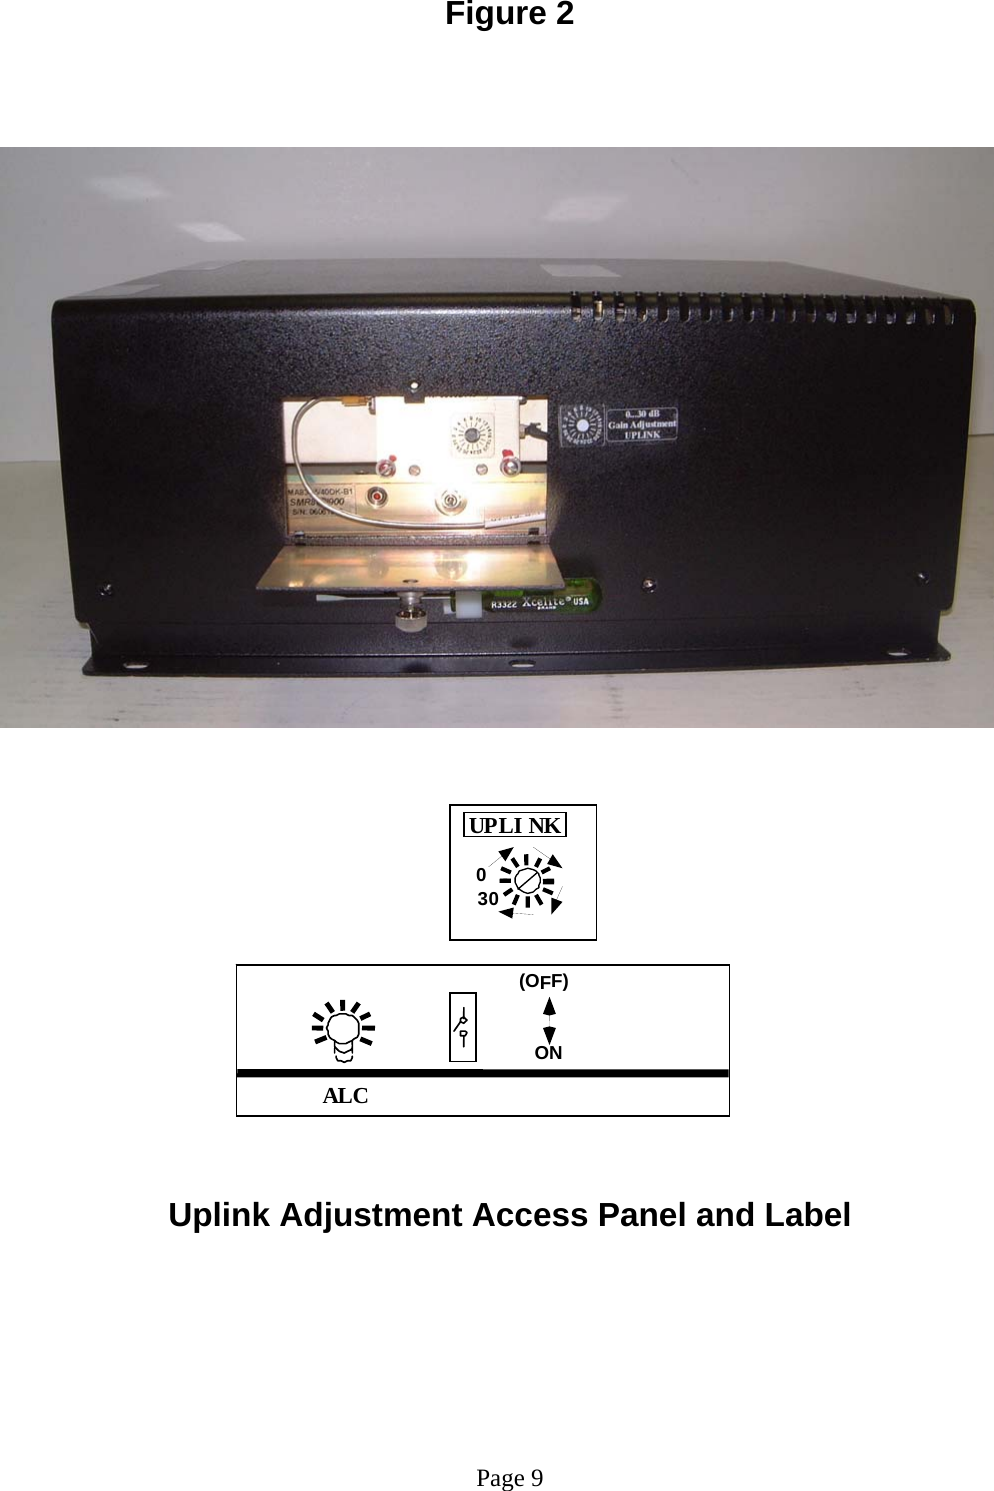 Figure 2                                                          Uplink Adjustment Access Panel and Label         Page 9  (OFF)ONA L C030UPLI NK